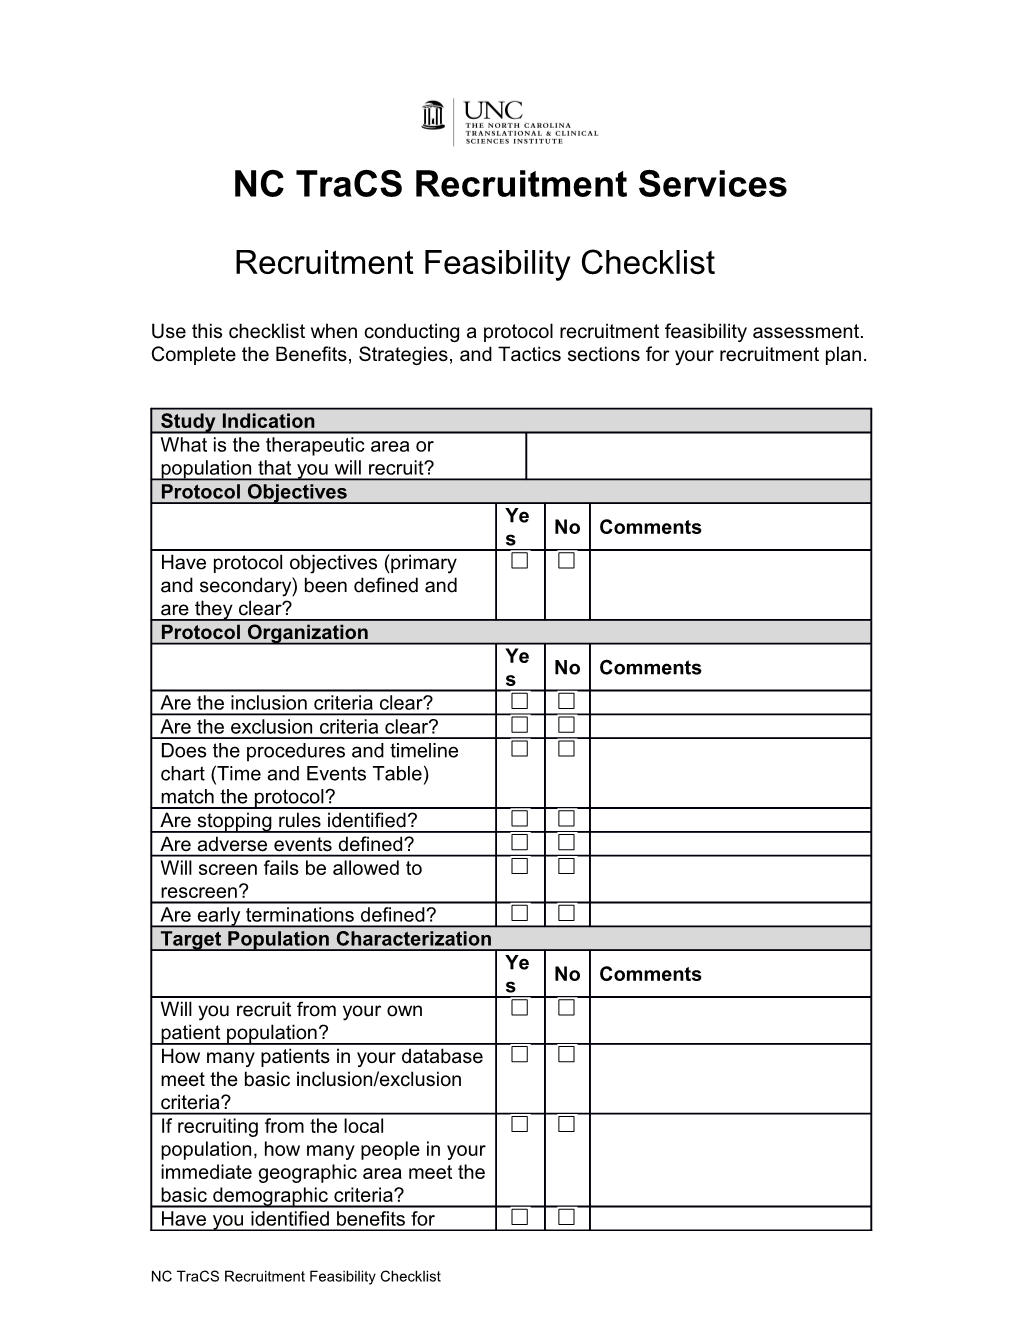 Protocol Recruitment Feasibility Assessment Checklist